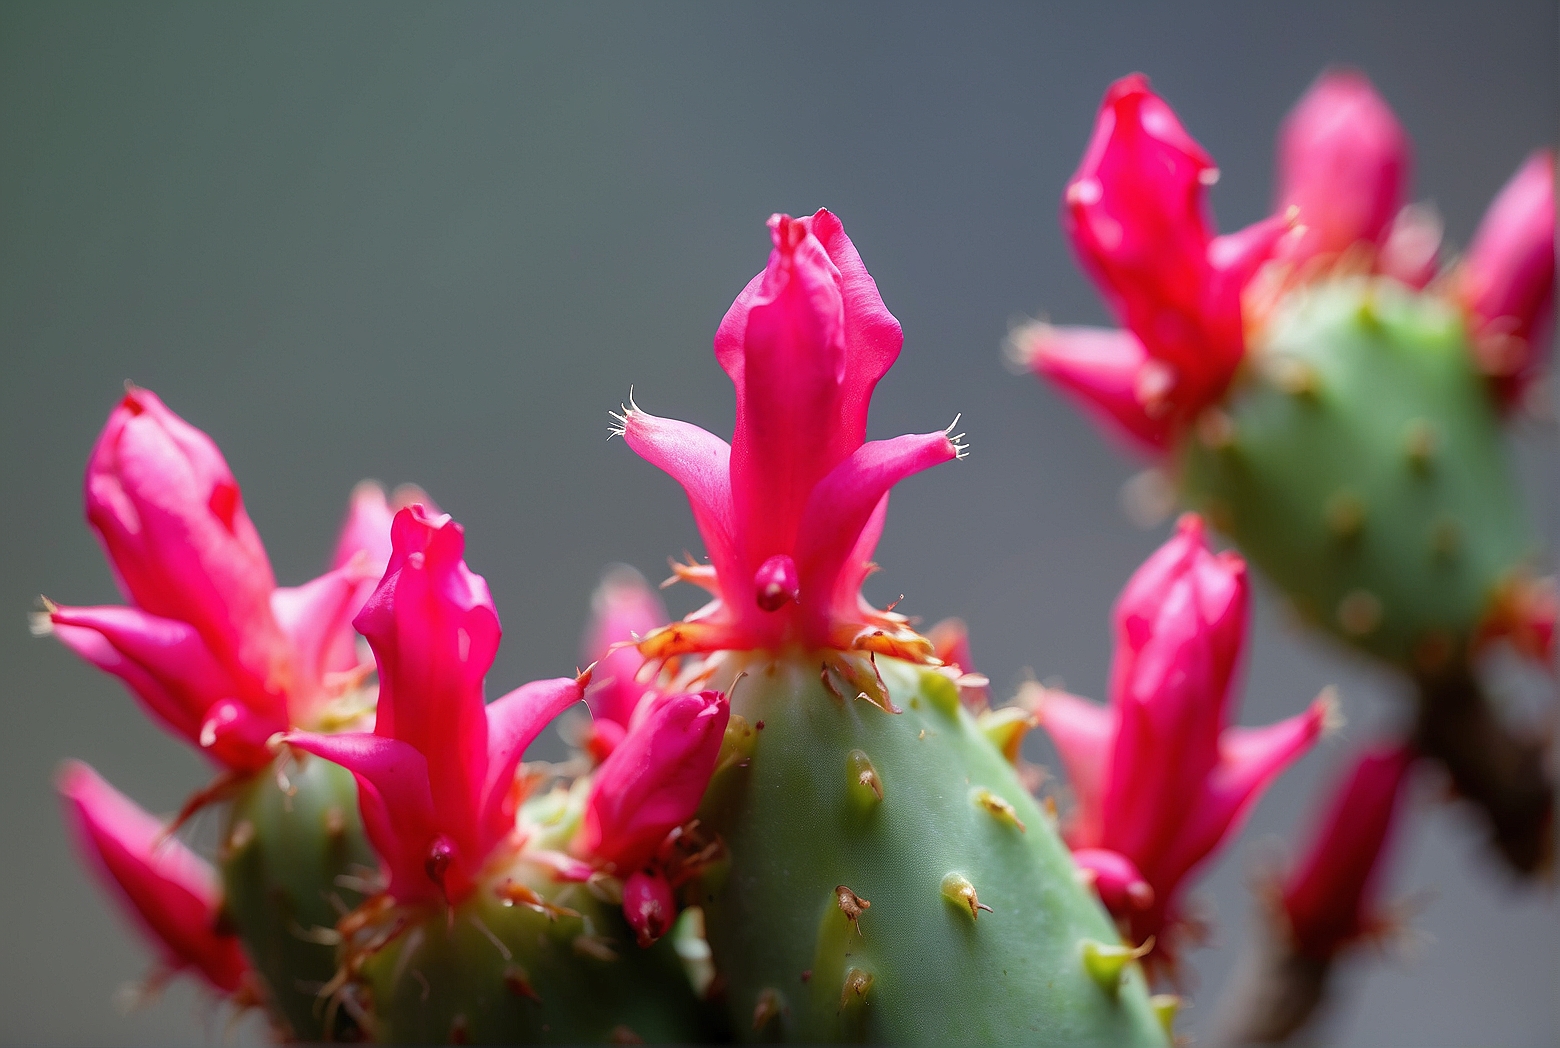 What do Christmas cactus buds look like?